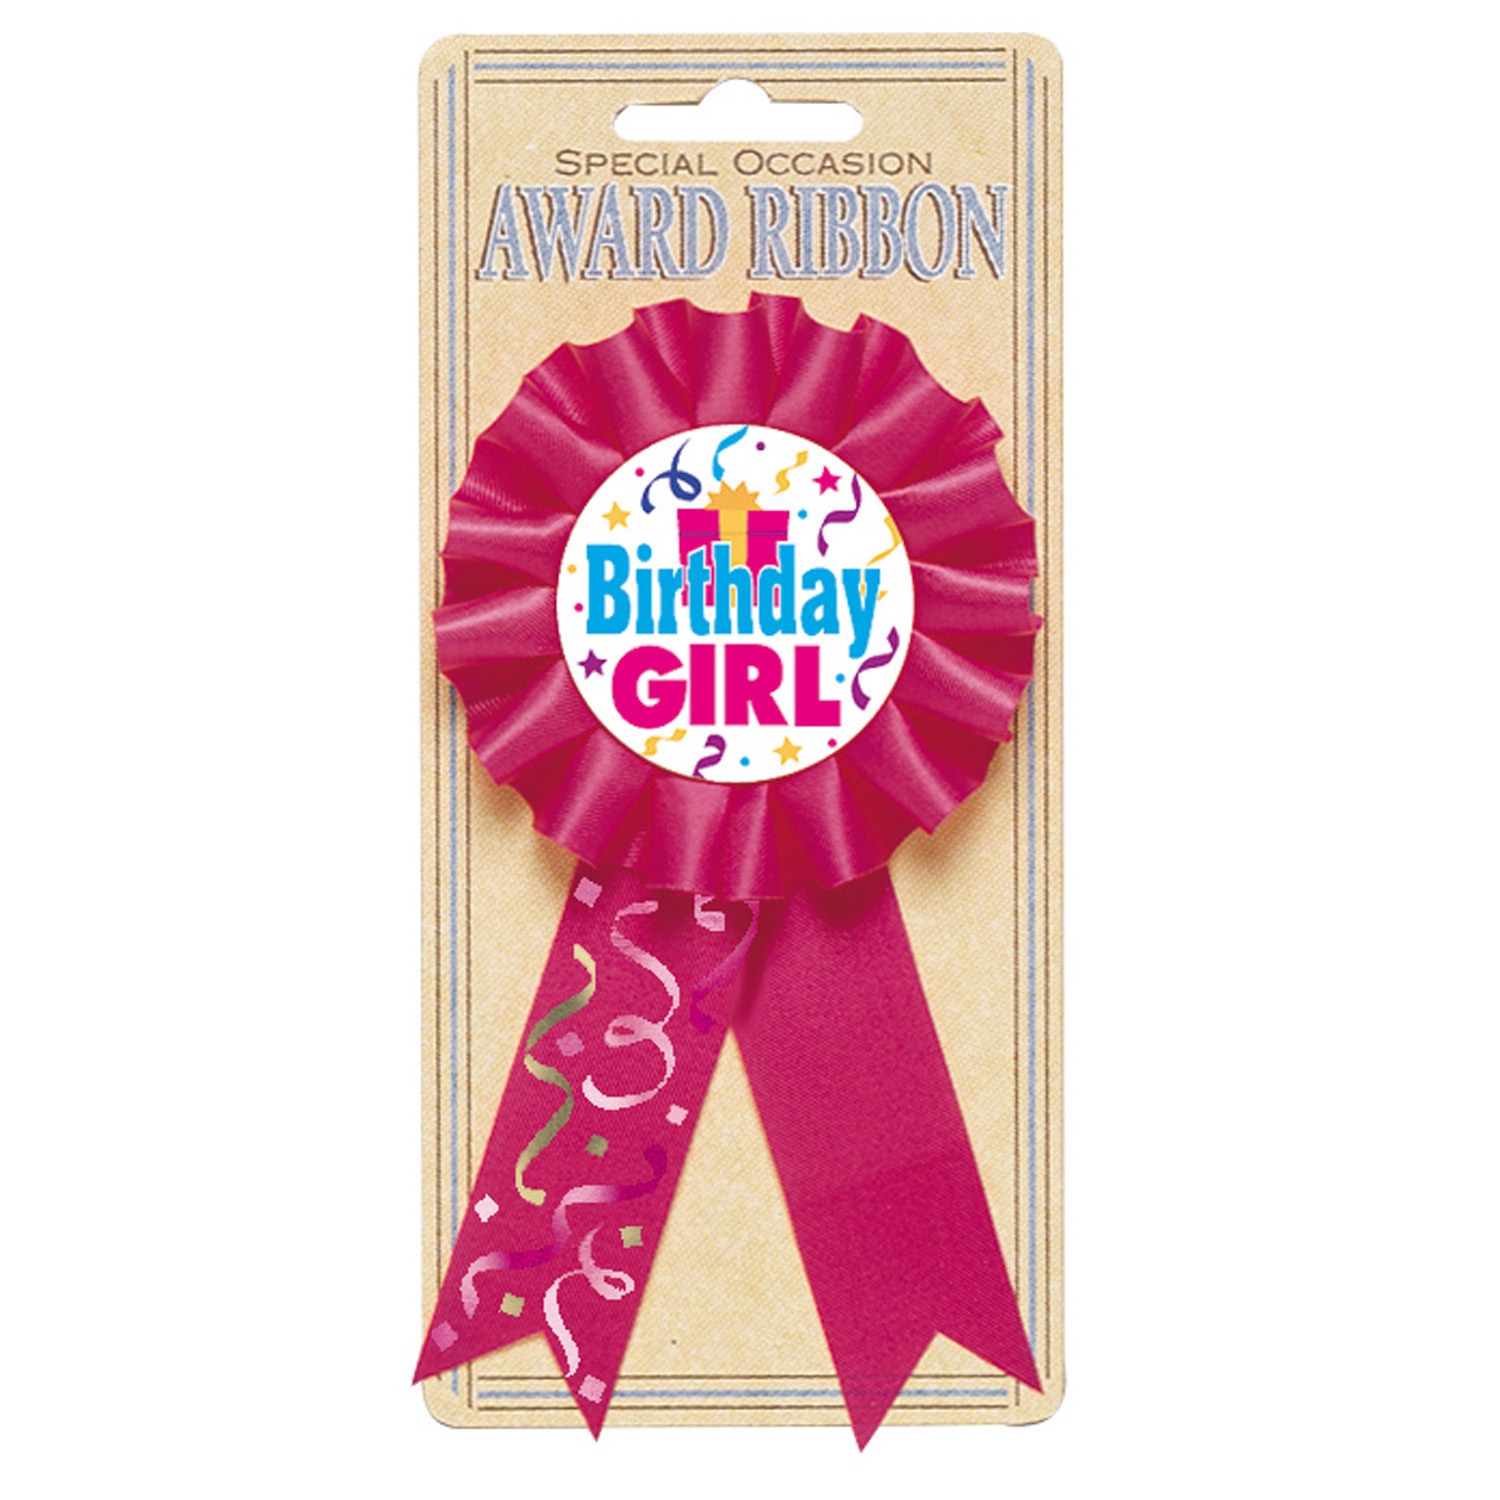 Award Ribbon Birthday Girl Fabric / Paper 8.1 x 15.2cm : Amscan Europe